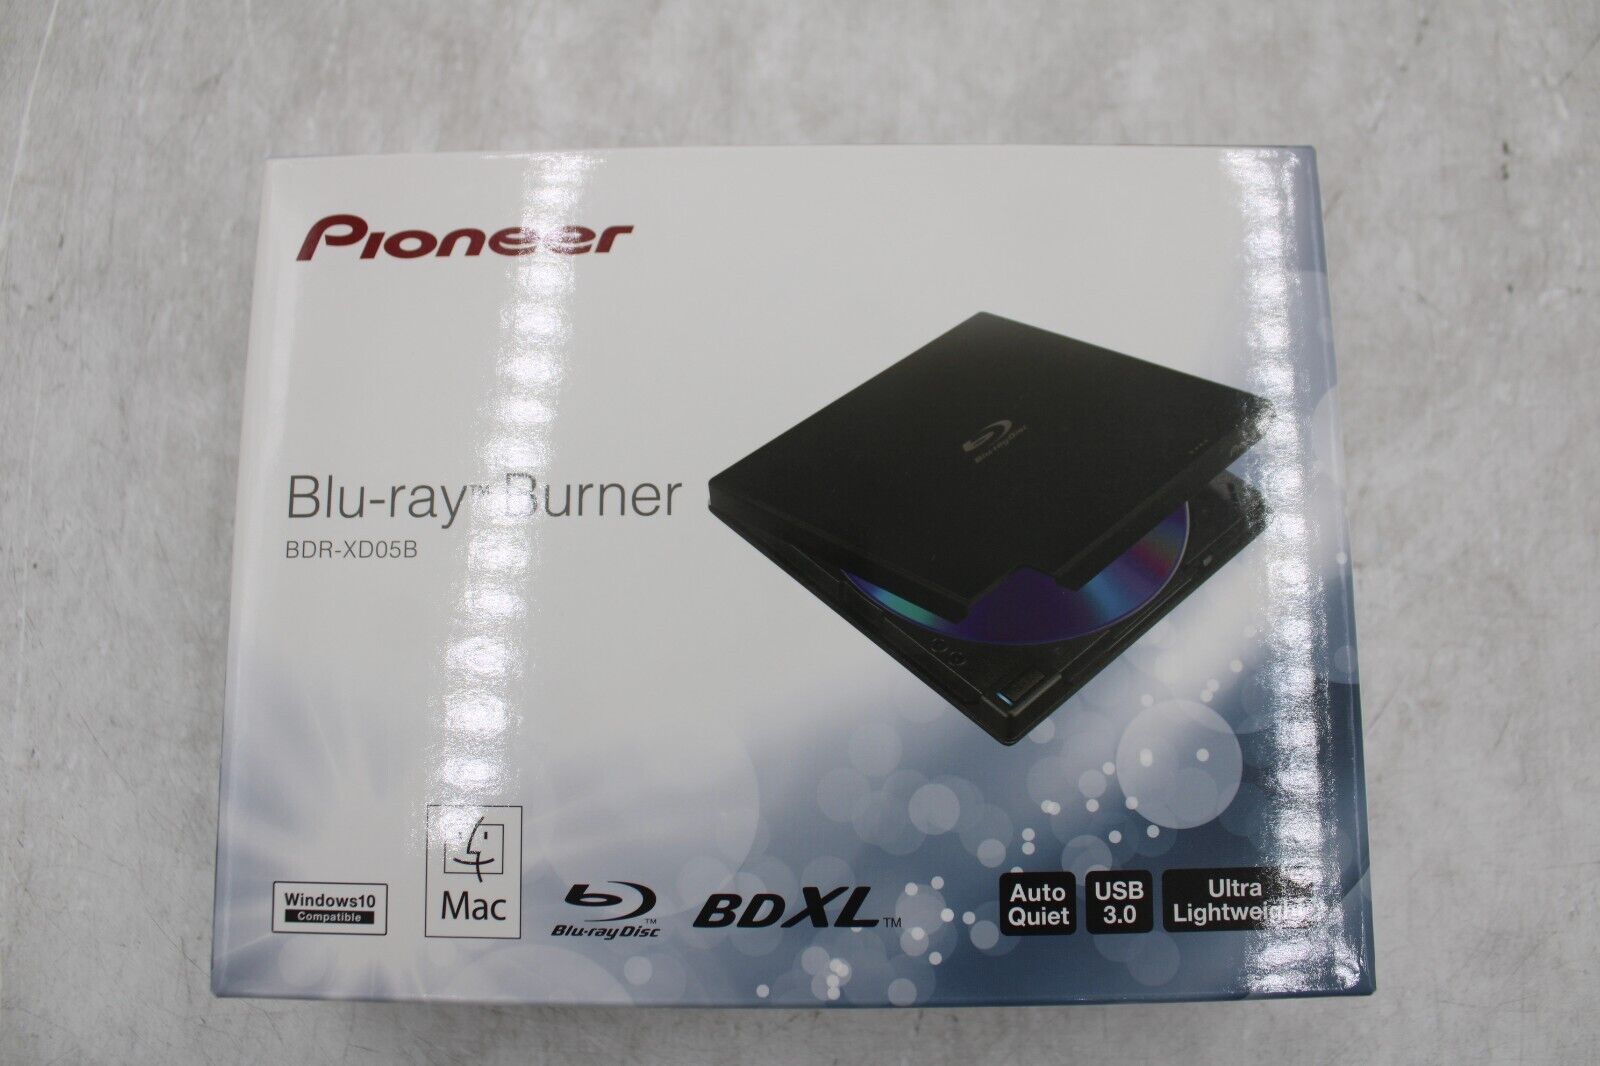 LOT OF 10 Pioneer BDR-XD05B 6X Slim Portable USB 3.0 Blu-Ray Burner BD-DVD/CD